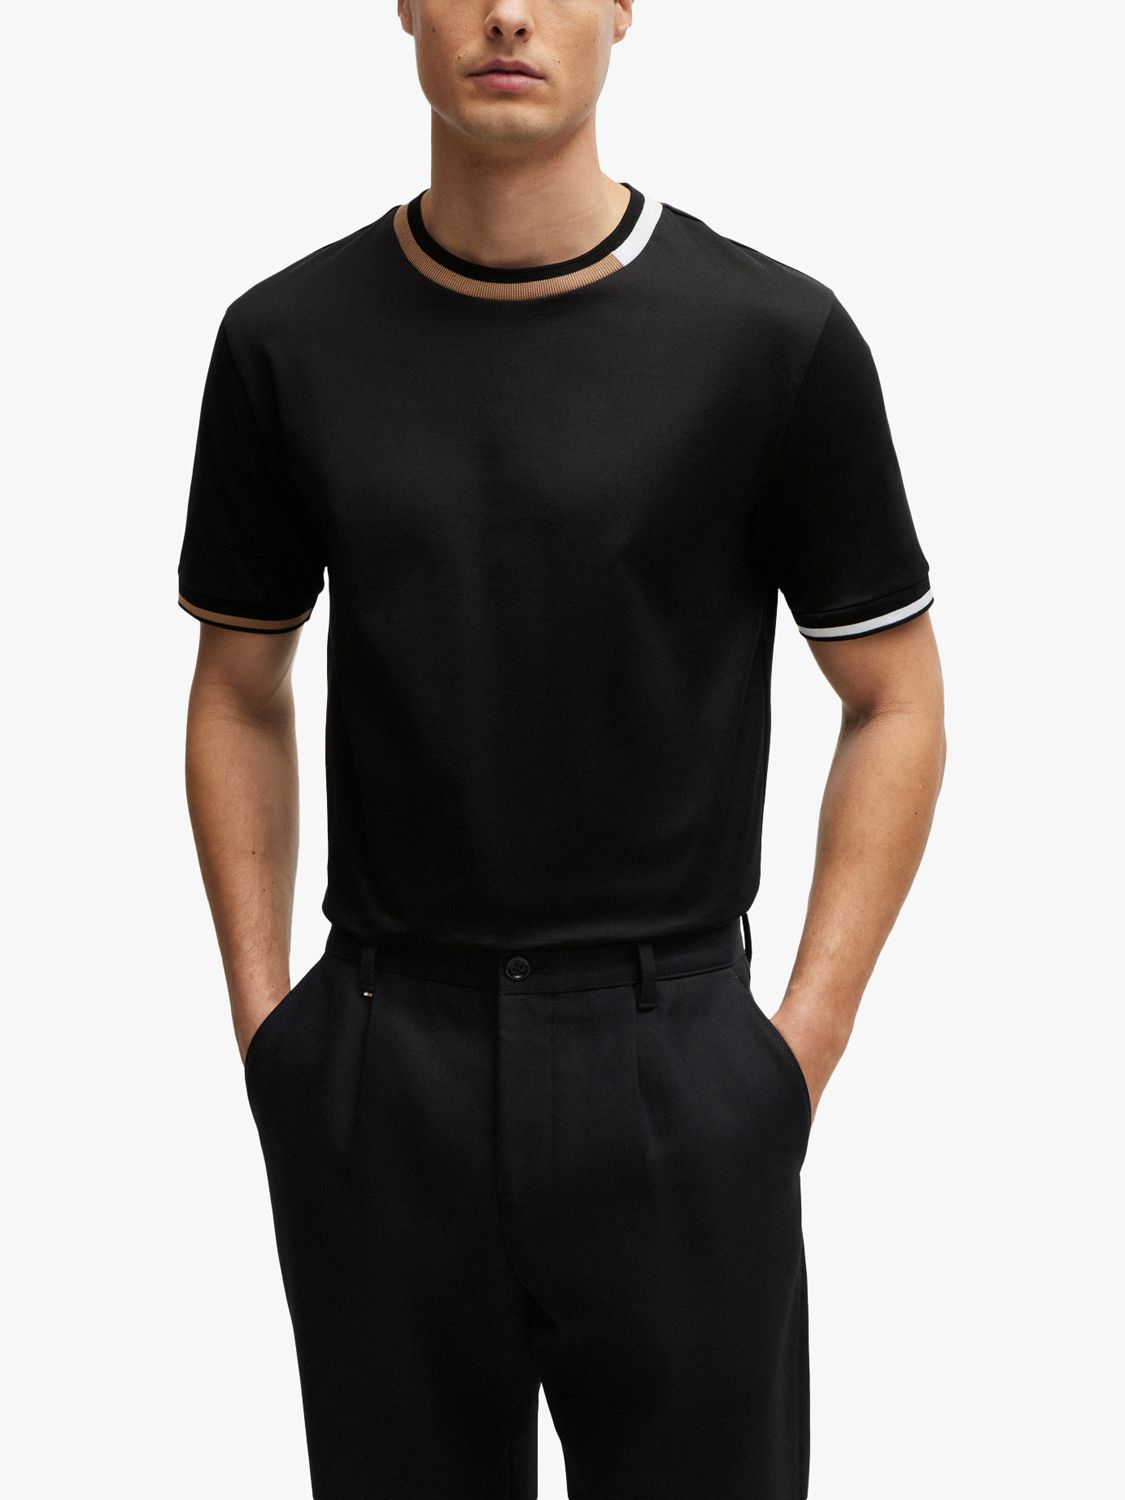 BOSS Thompson Regular Fit T-Shirt, Black, L